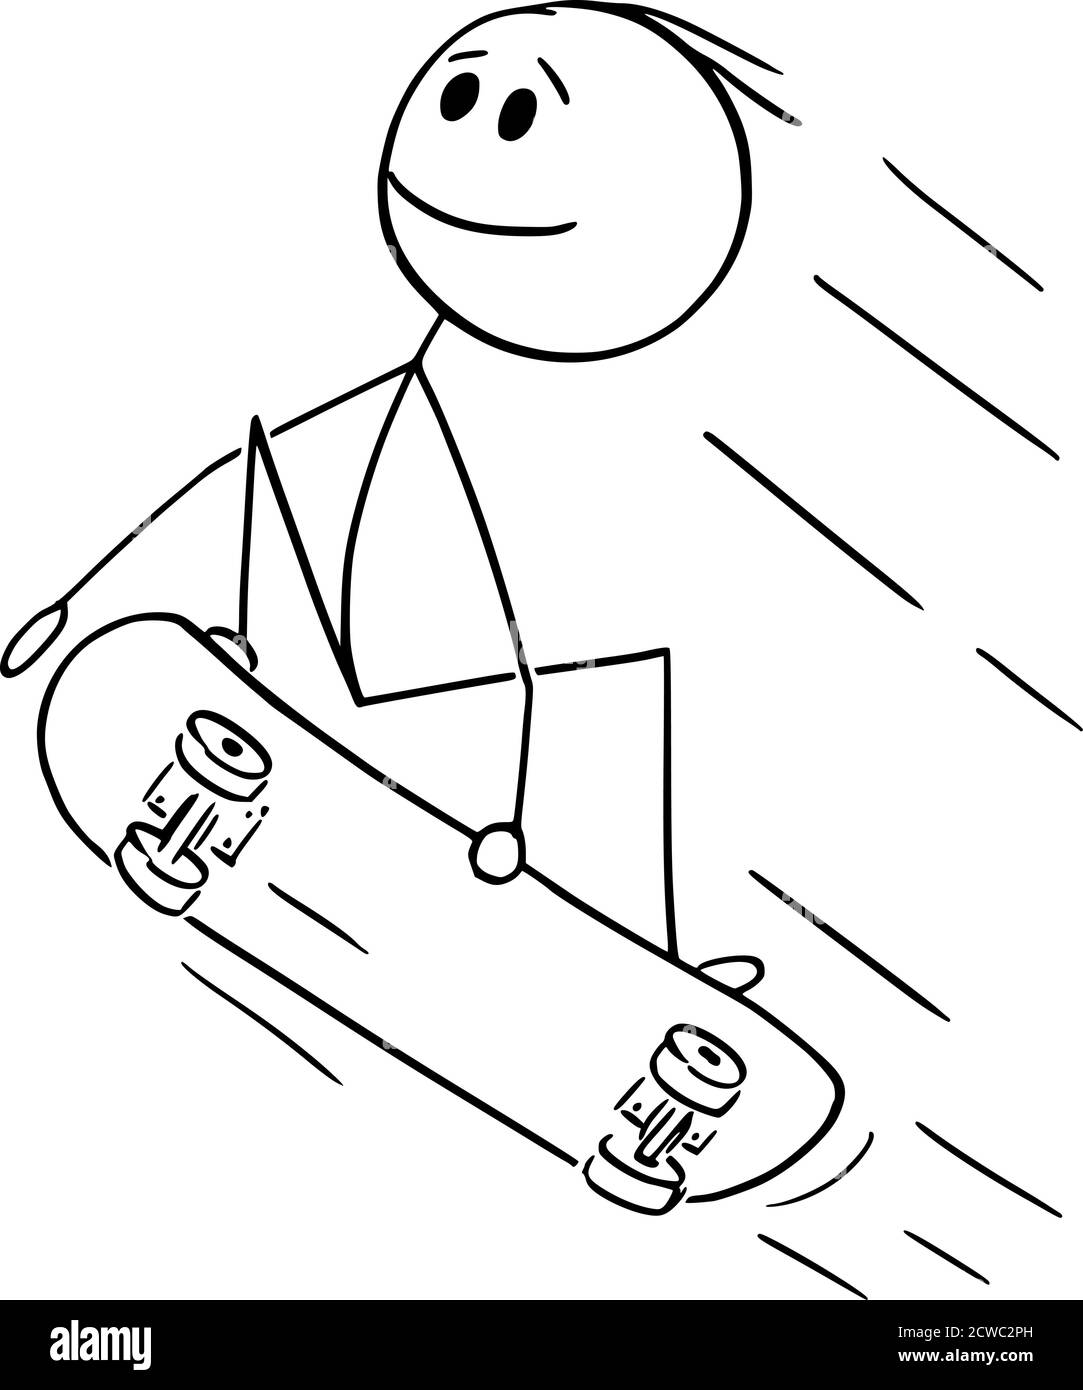 Vector cartoon stick figure drawing conceptual illustration of man, boy,  skater or skateboarder jumping or doing trick or skateboarding on  skateboard Stock Vector Image & Art - Alamy